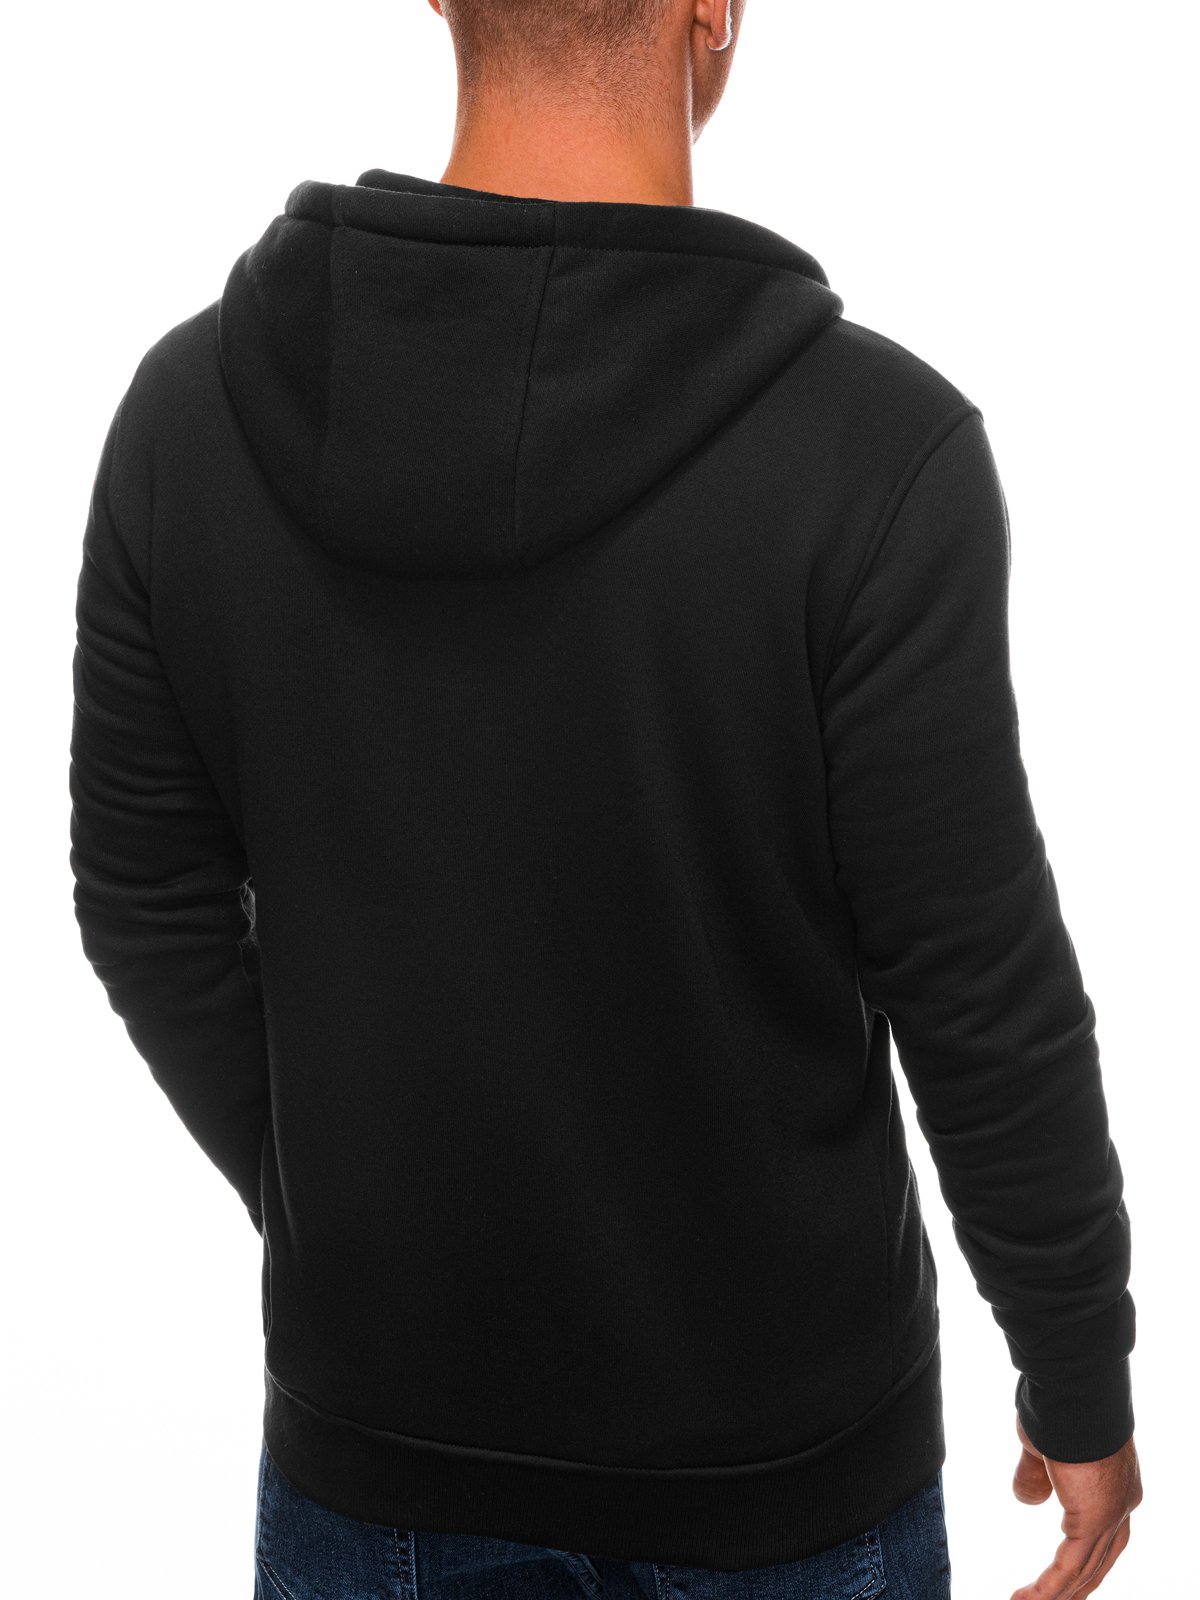 Men's zip-up sweatshirt B895 - black | MODONE wholesale - Clothing For Men